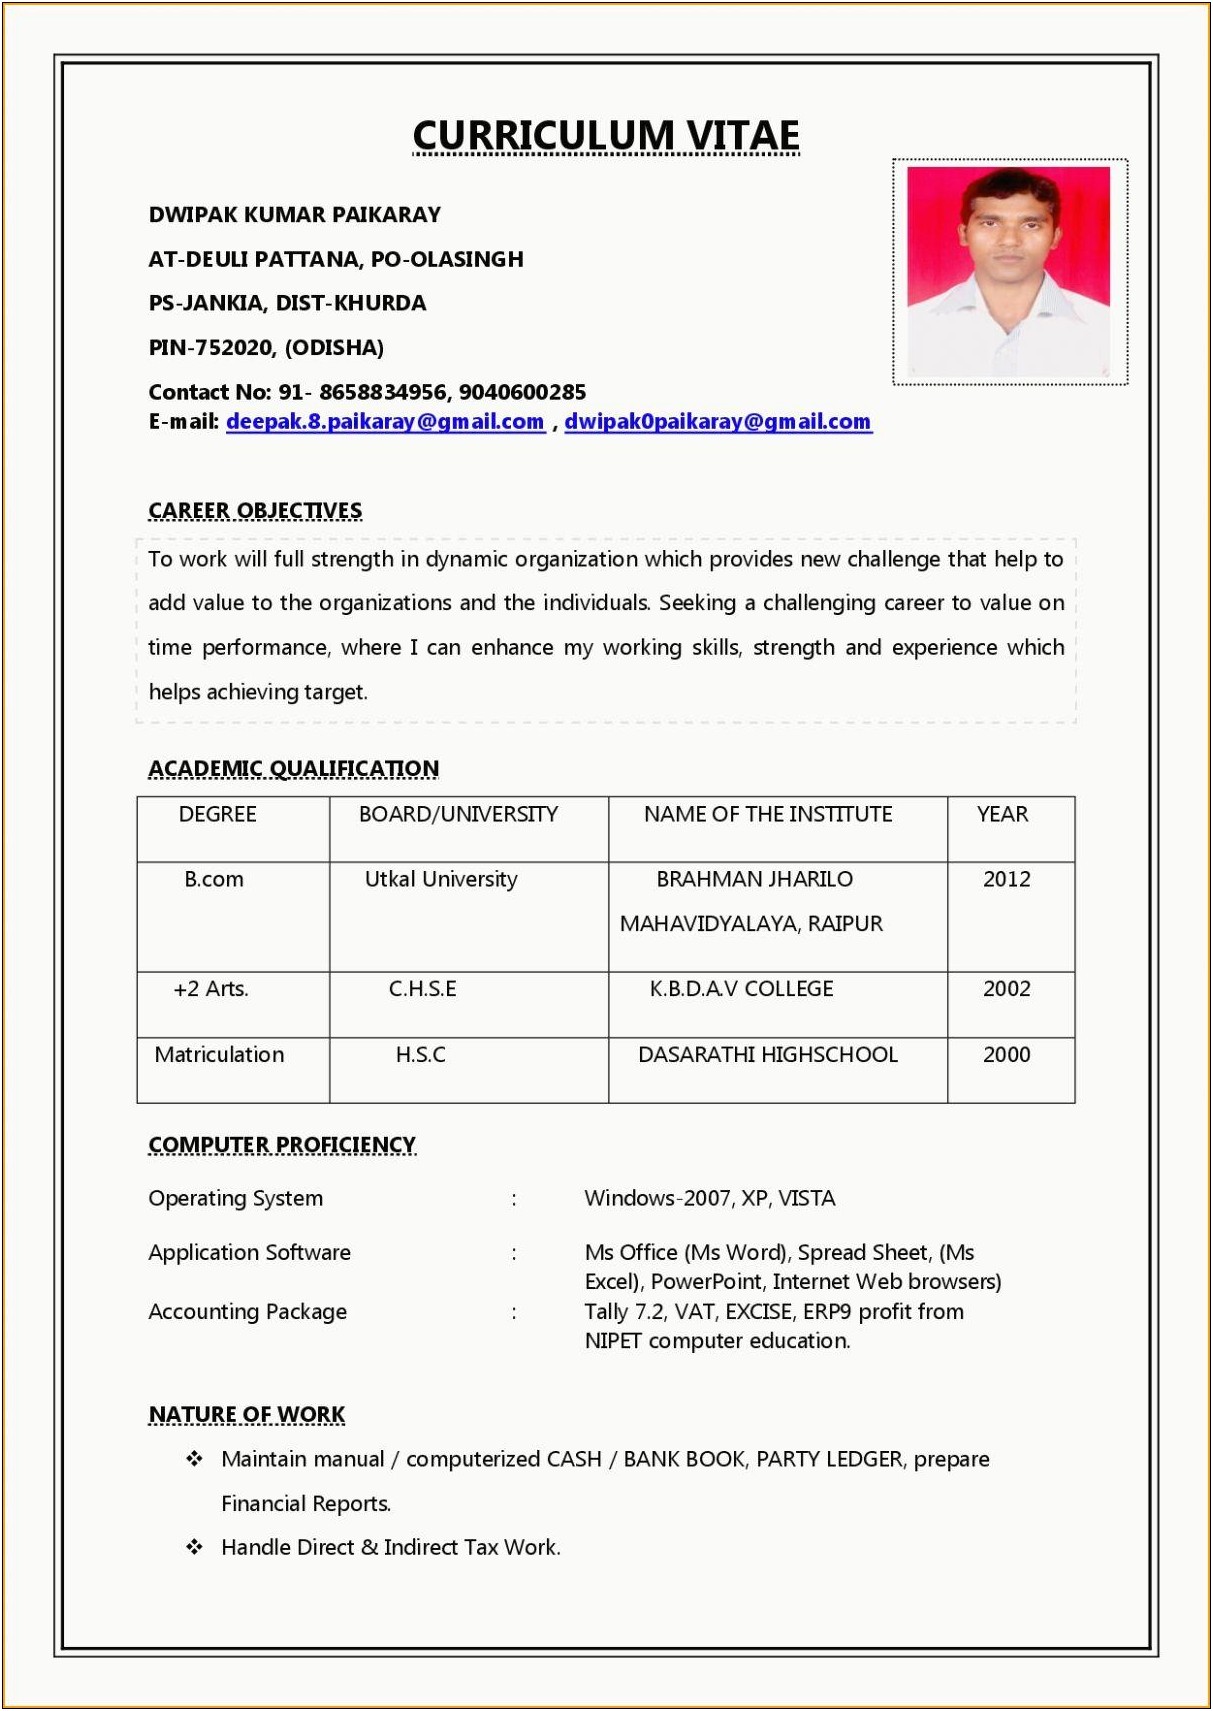 Resume Format For Internal Job Posting